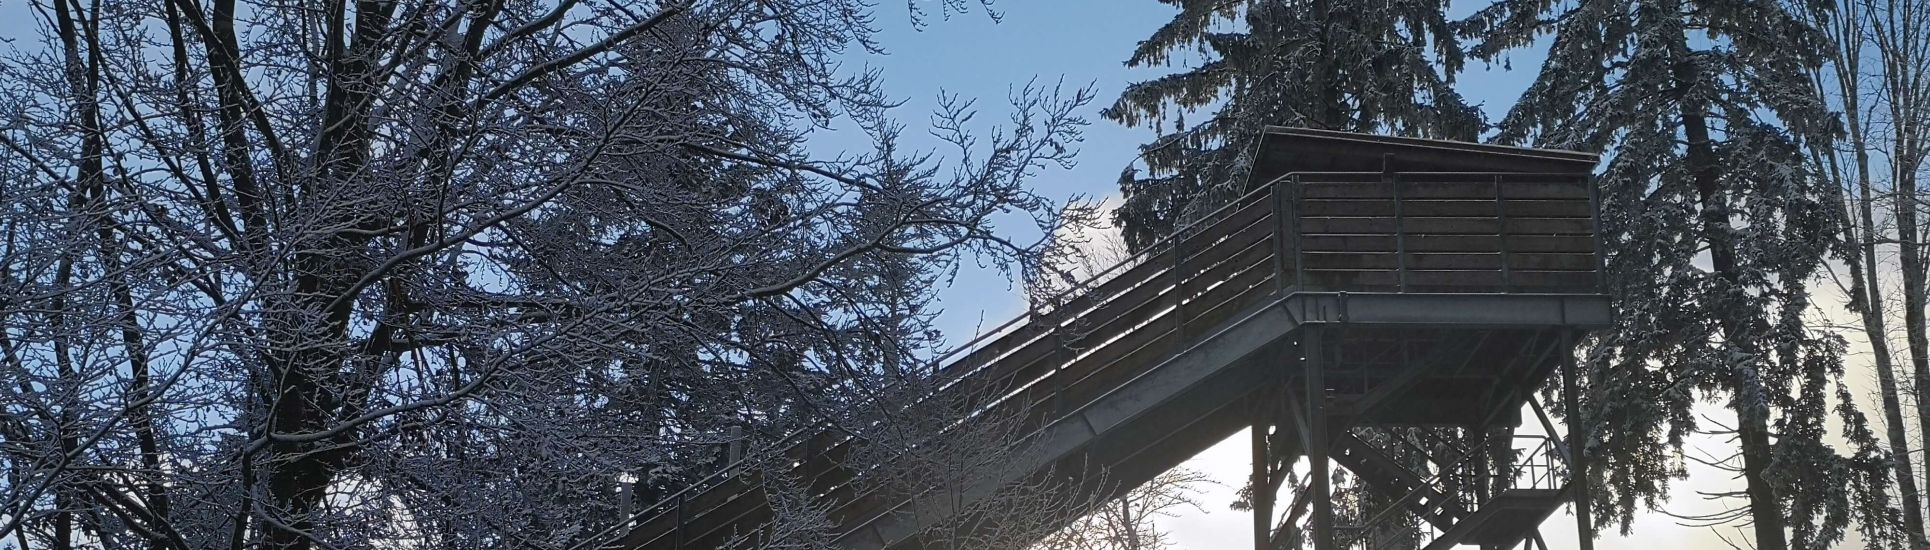 Sprungschanze Rastbüchl, Anlaufturm im Winter